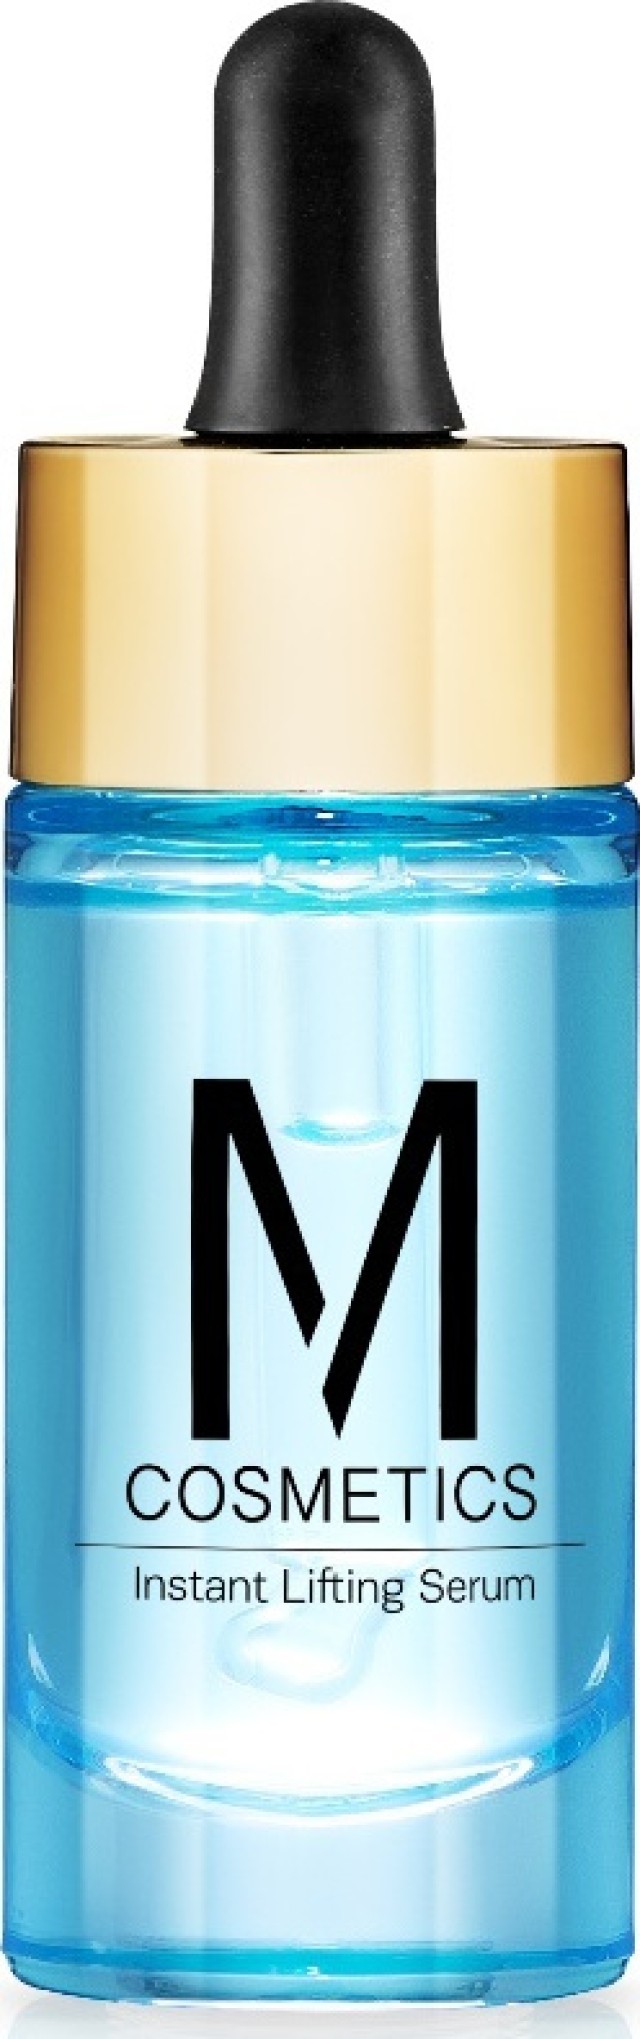 M Cosmetics Instant Lifting Serum Ορός Προσώπου Για Άμεση Ανόρθωση, 15ml